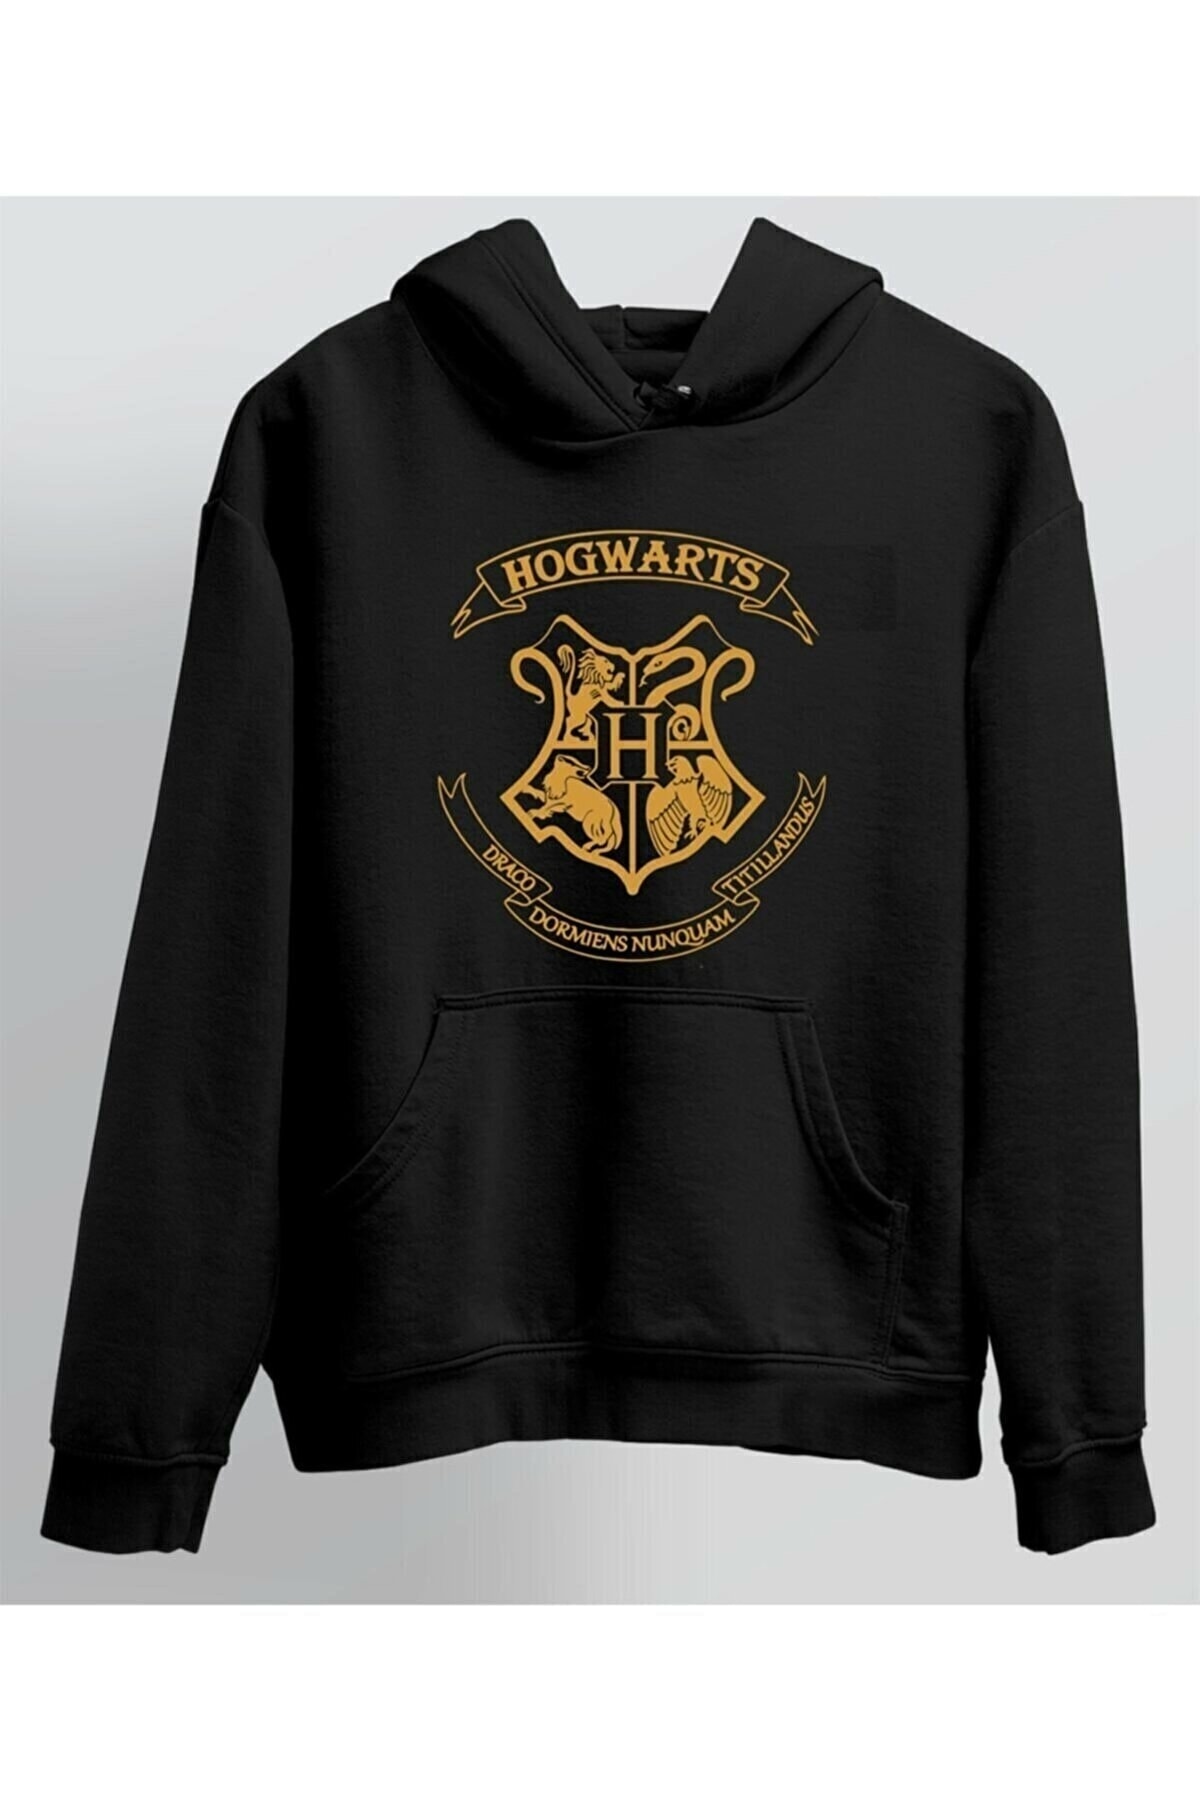 WildPhire Boutique Hogwarts Harry Potter Kapüşonlu Hoodie Sweatshirt Adv-hogwarts-001